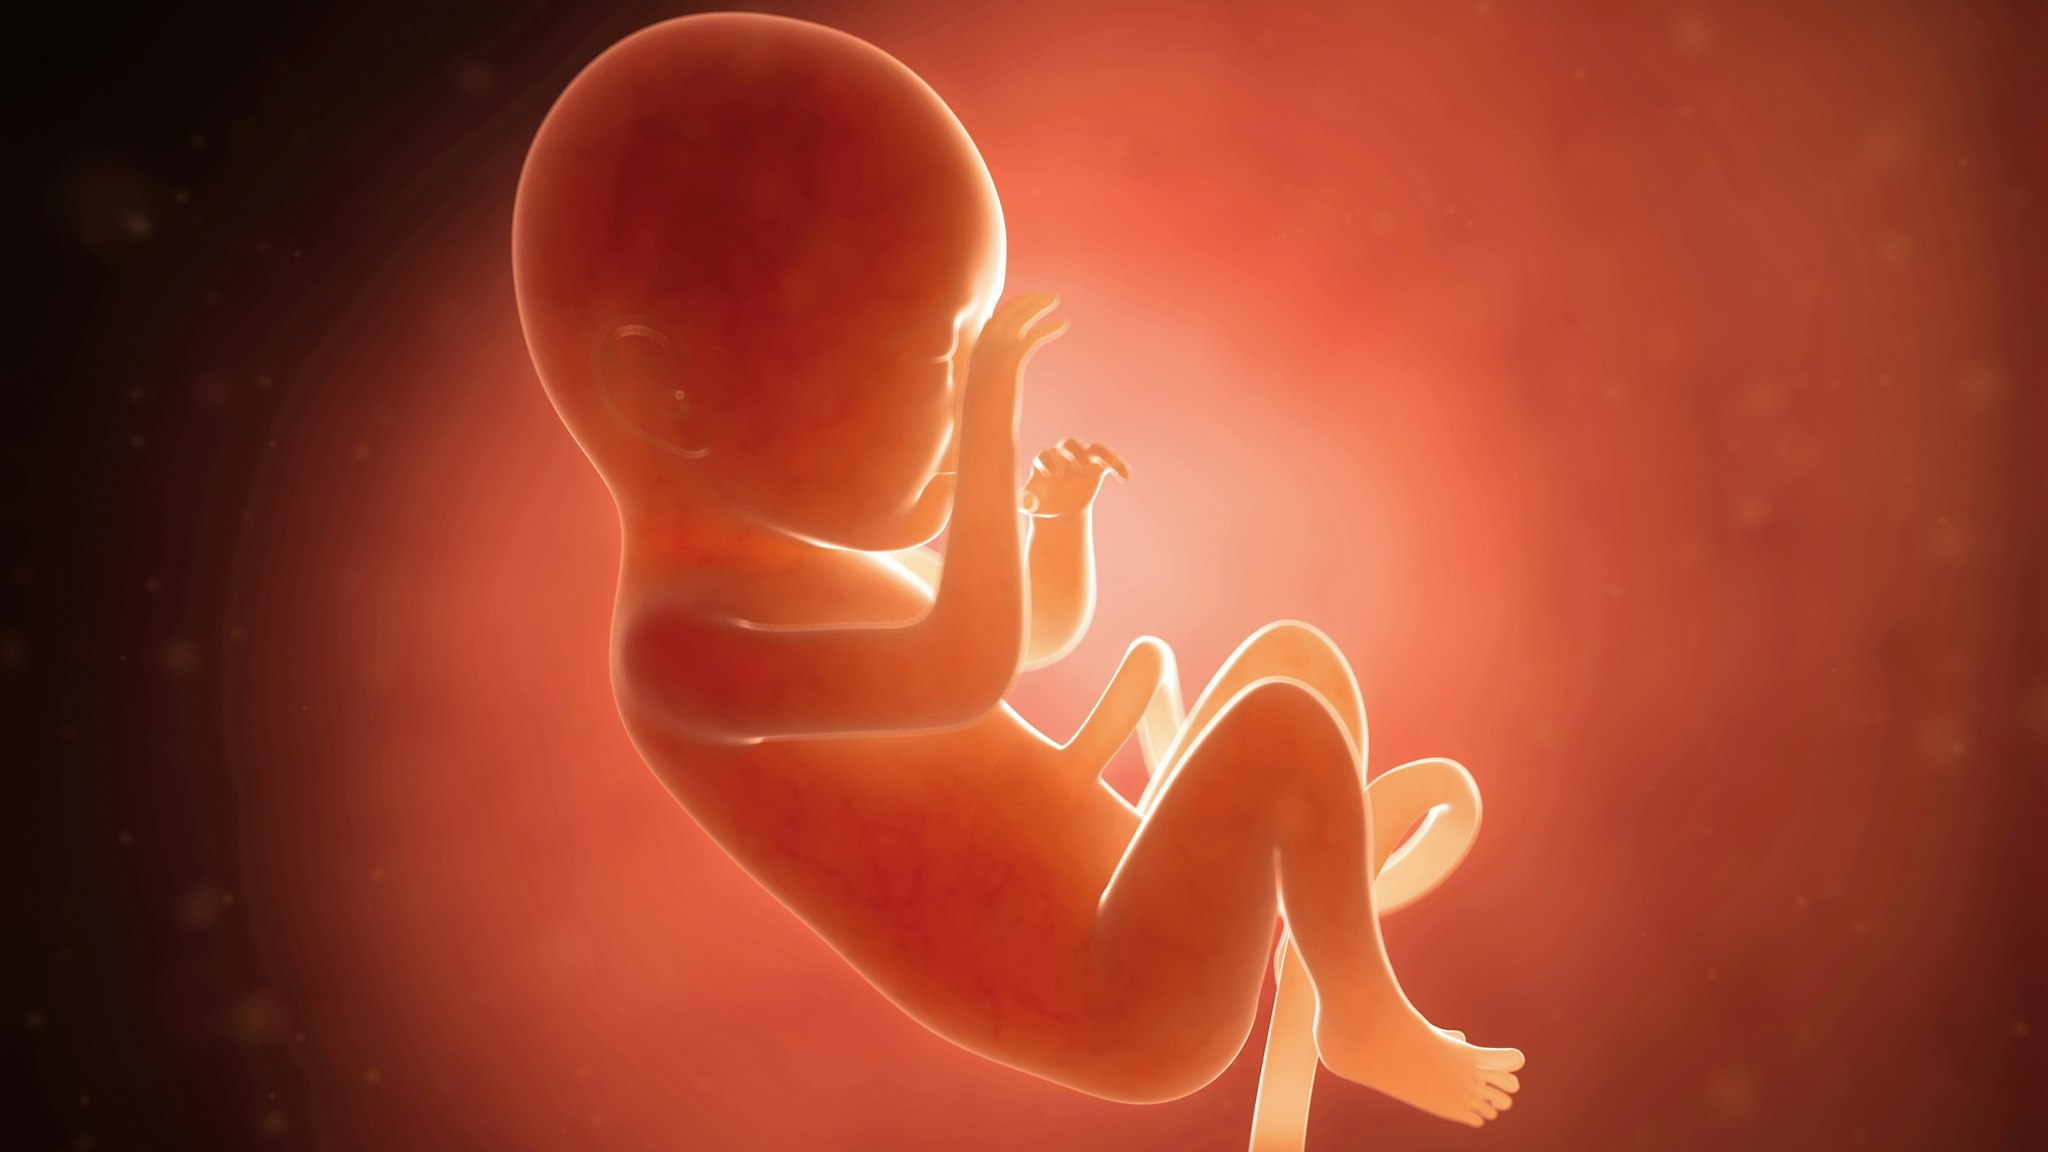 Human fetus at 7 months, computer illustration.